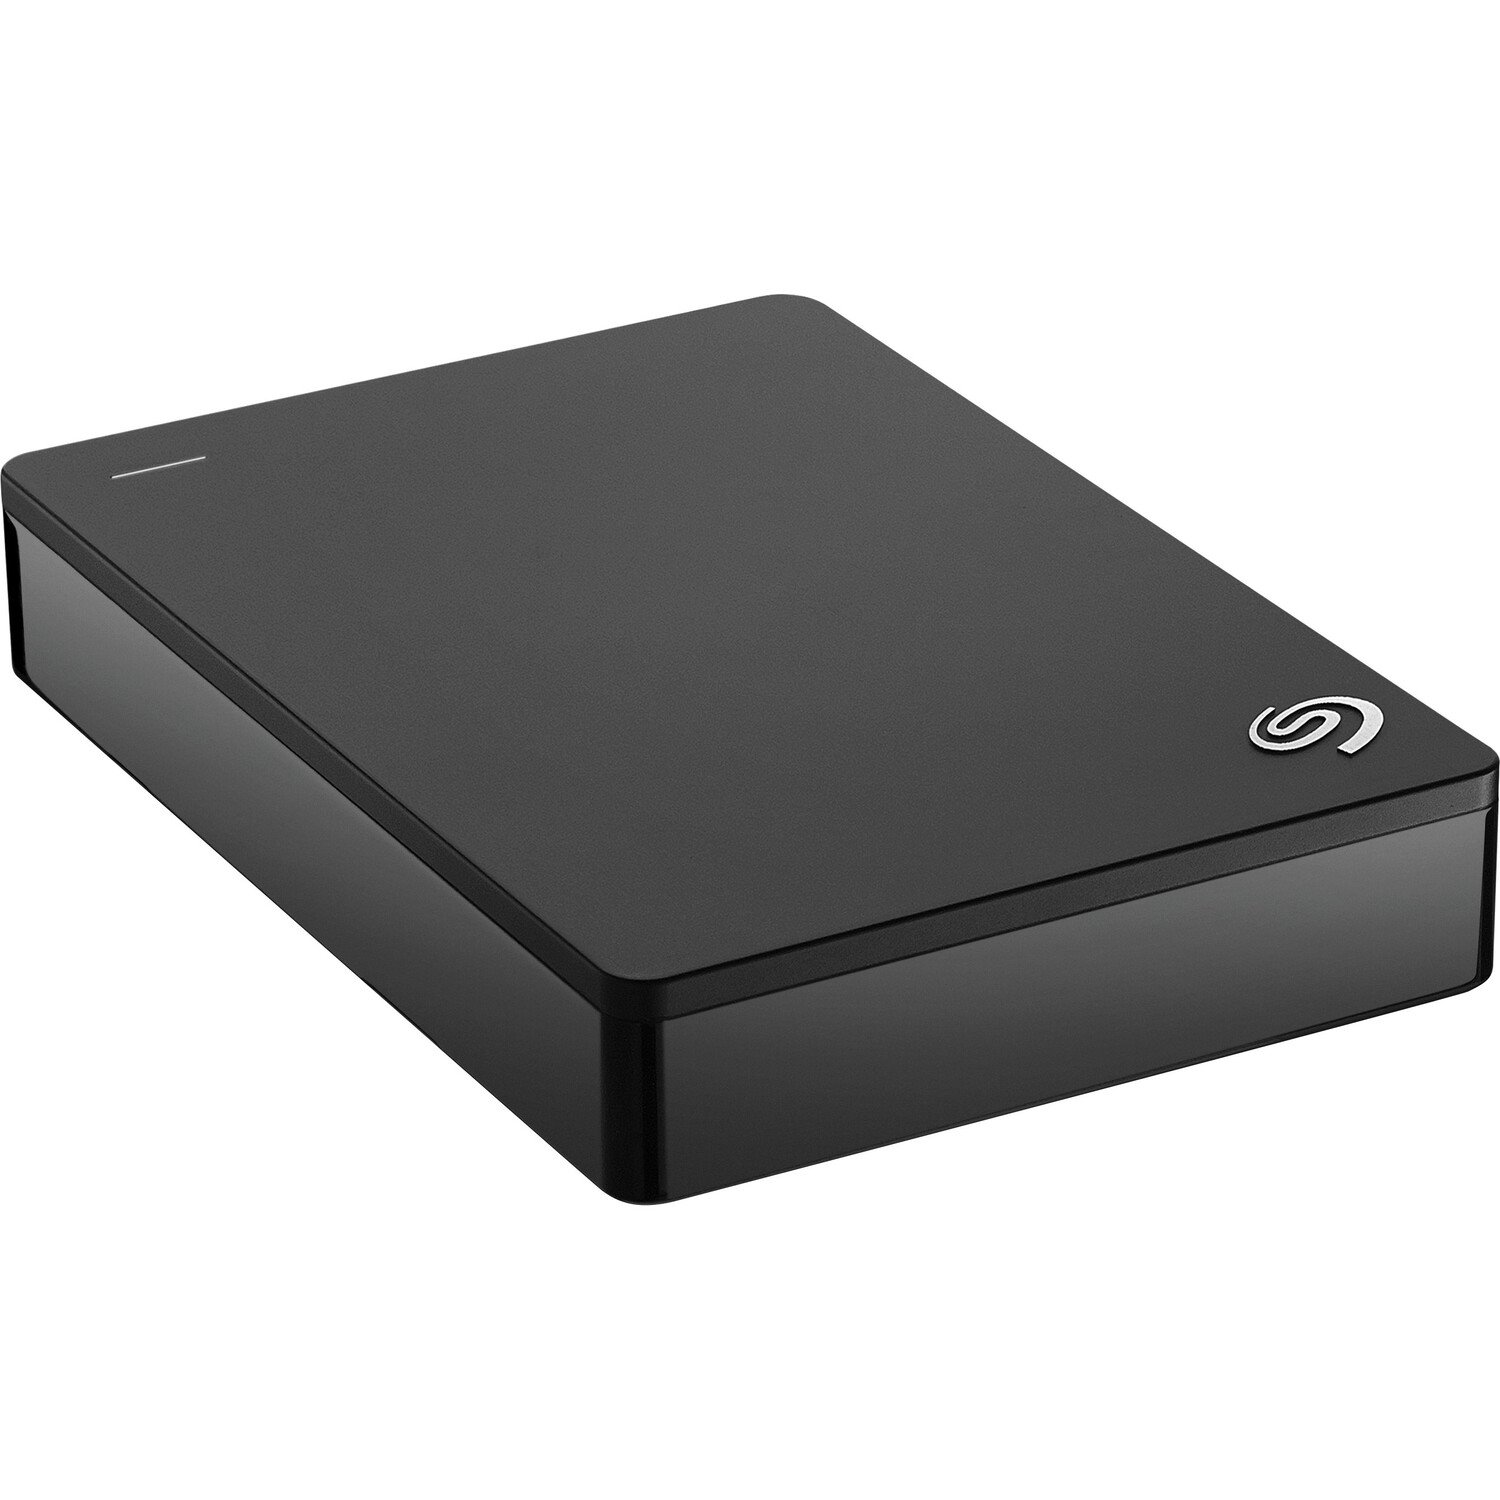 Seagate Backup Plus STDR4000300 4 TB Portable Hard Drive - 2.5" External - Black